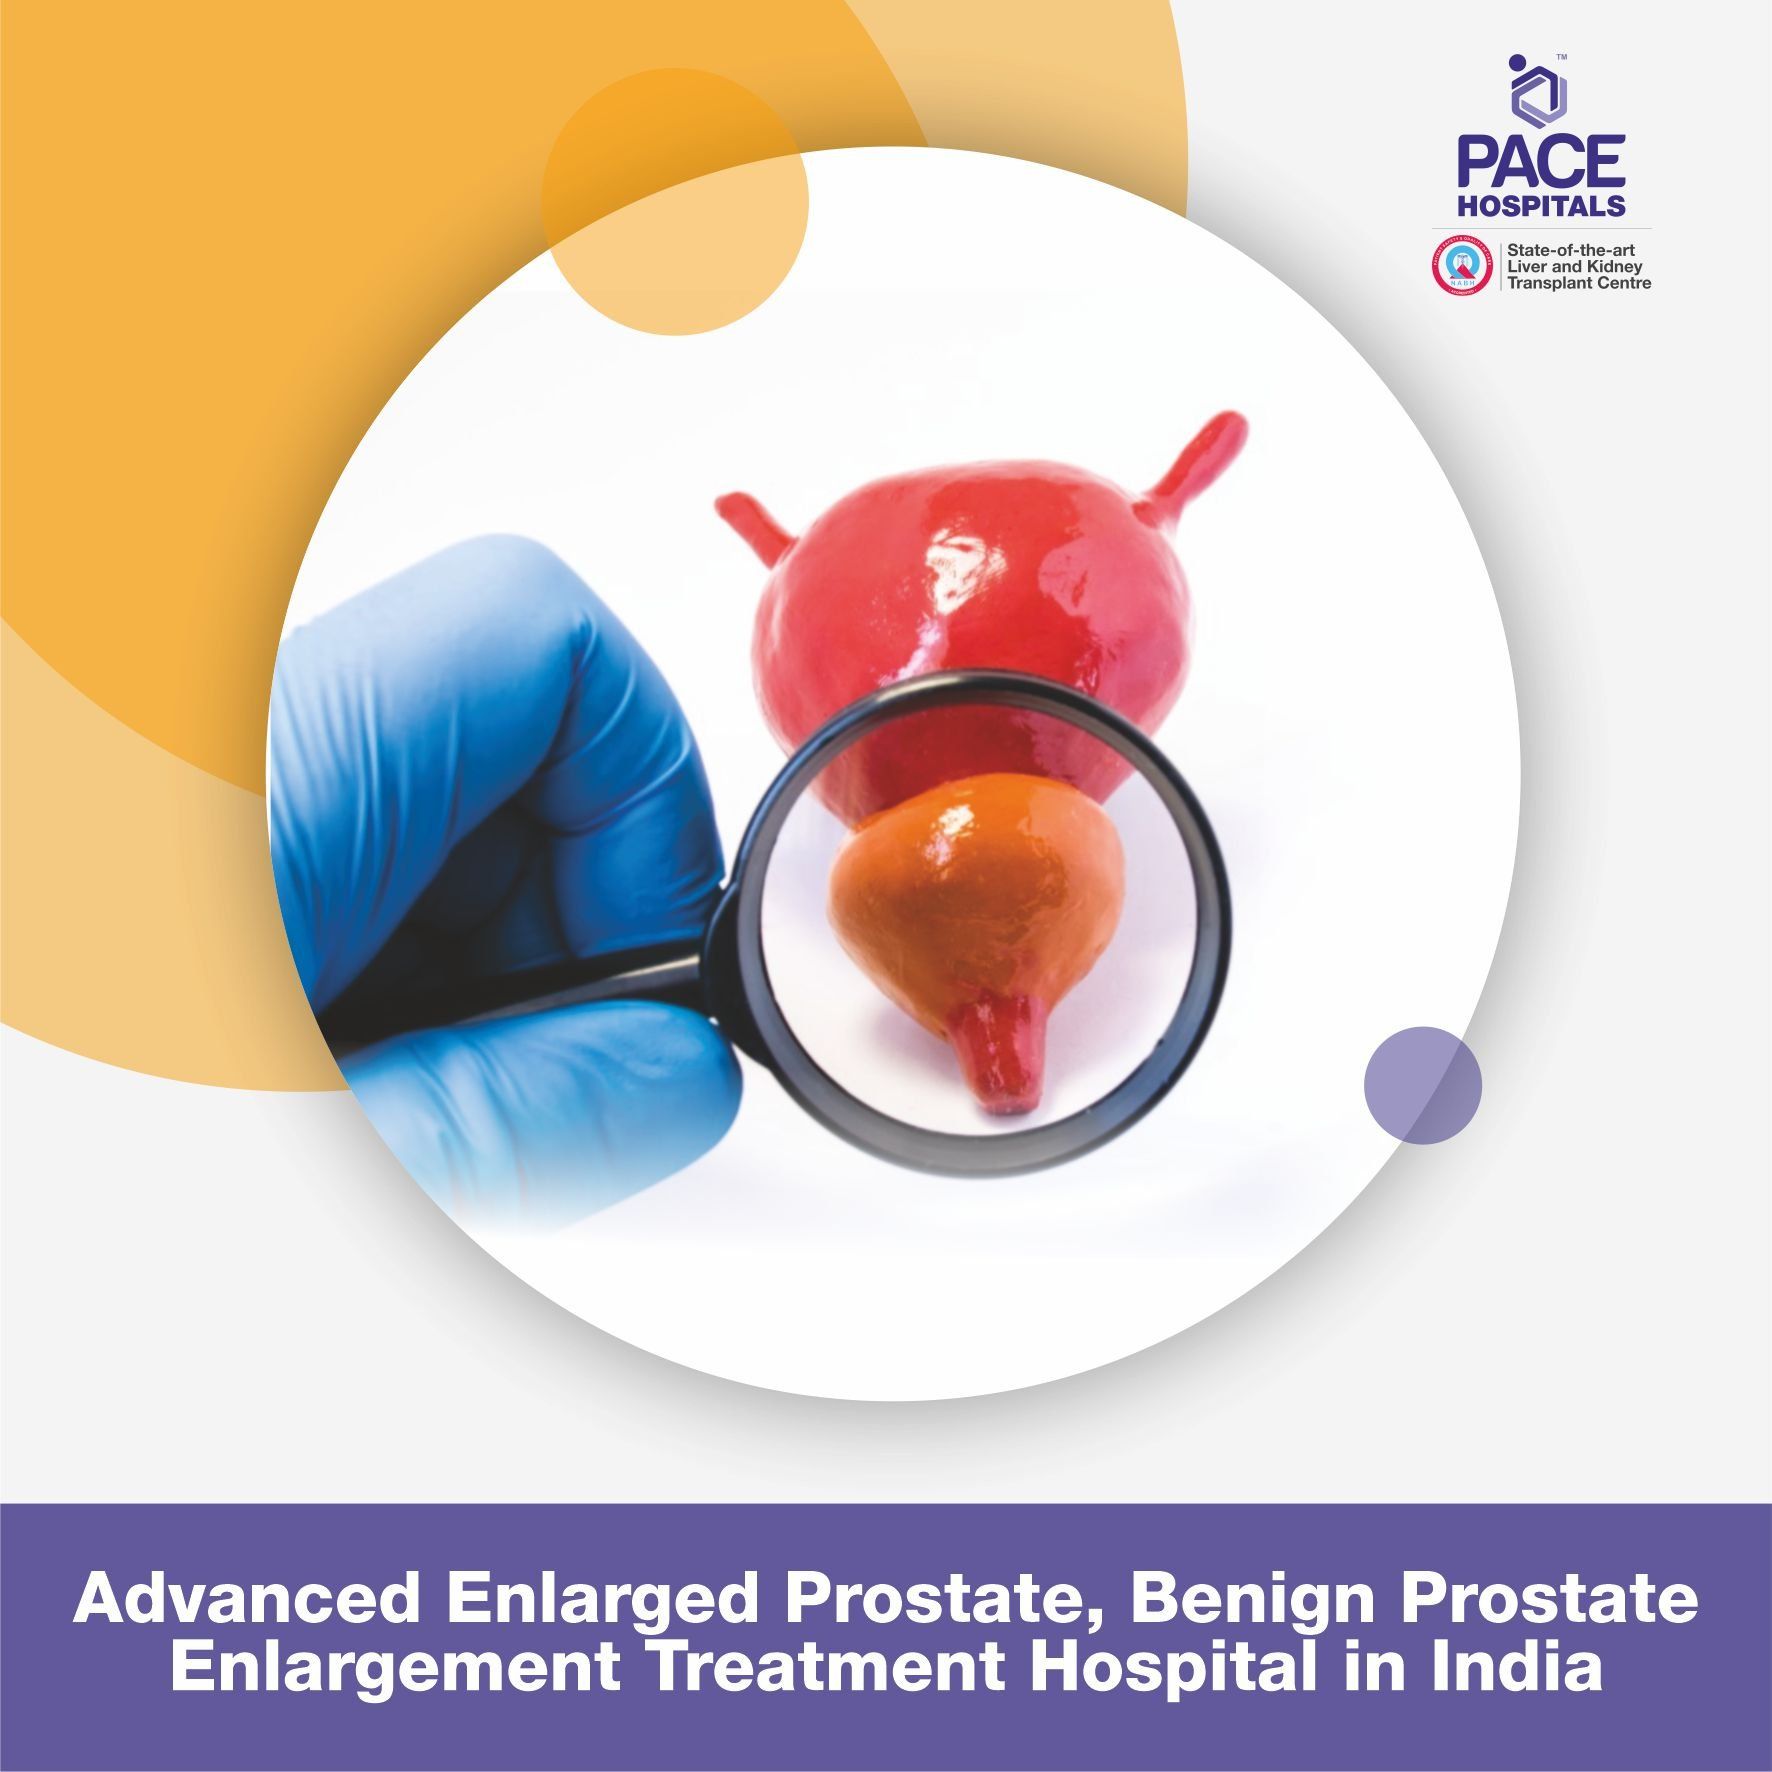 Advanced Enlarged Prostate, Benign Prostate Enlargement Treatment Hospital in India